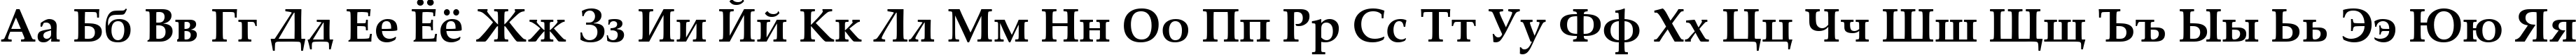 Пример написания русского алфавита шрифтом Palatino Linotype Bold